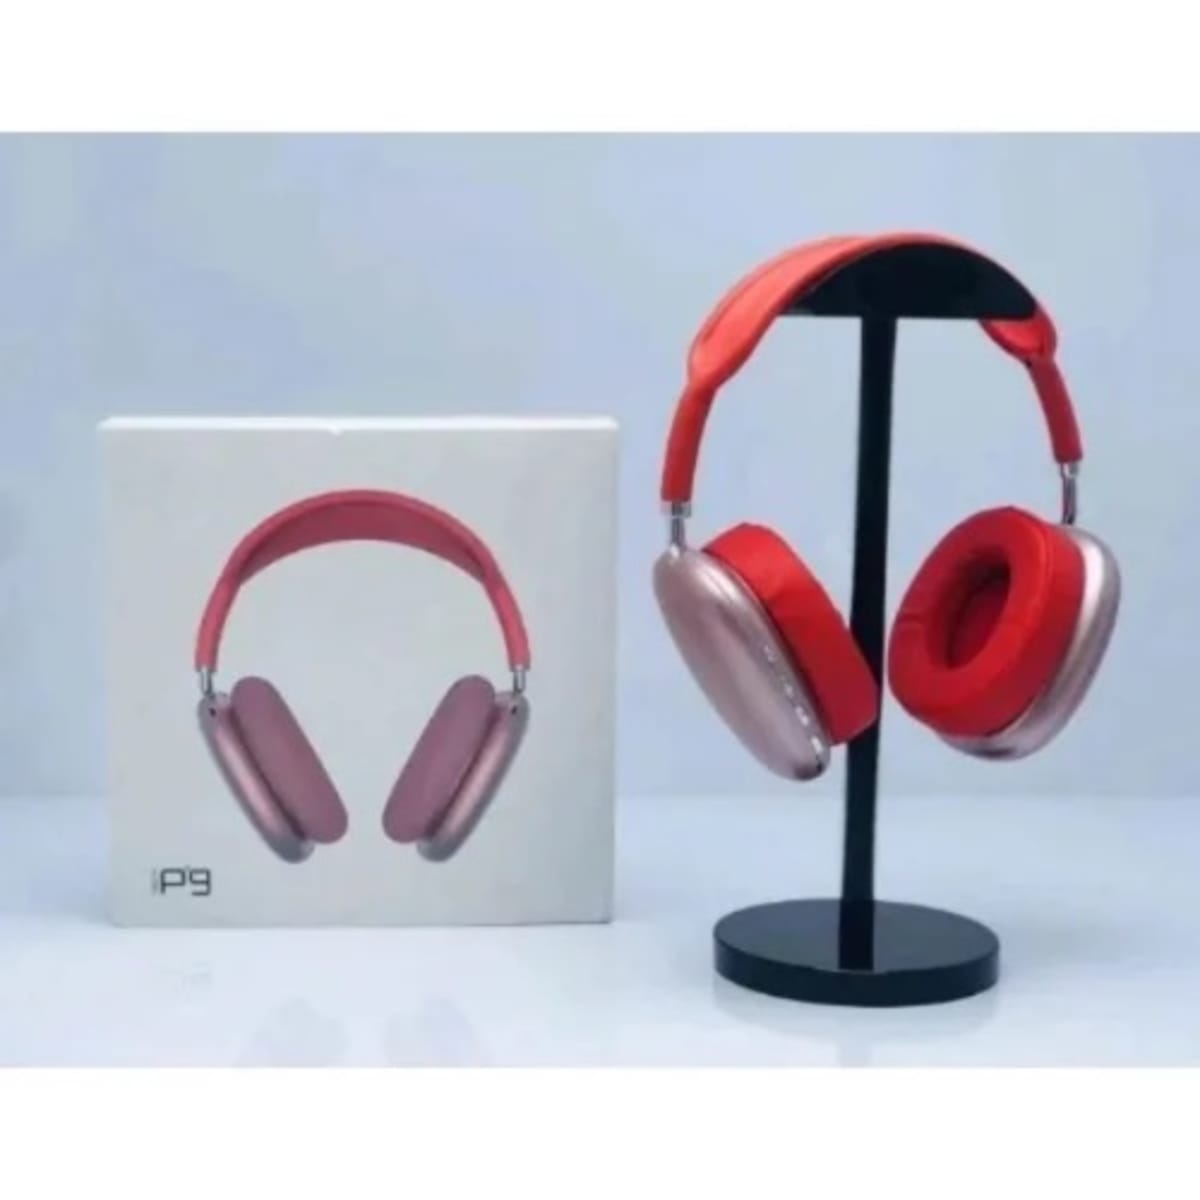 P9 Bluetooth Headset Wireless Headphones - Red